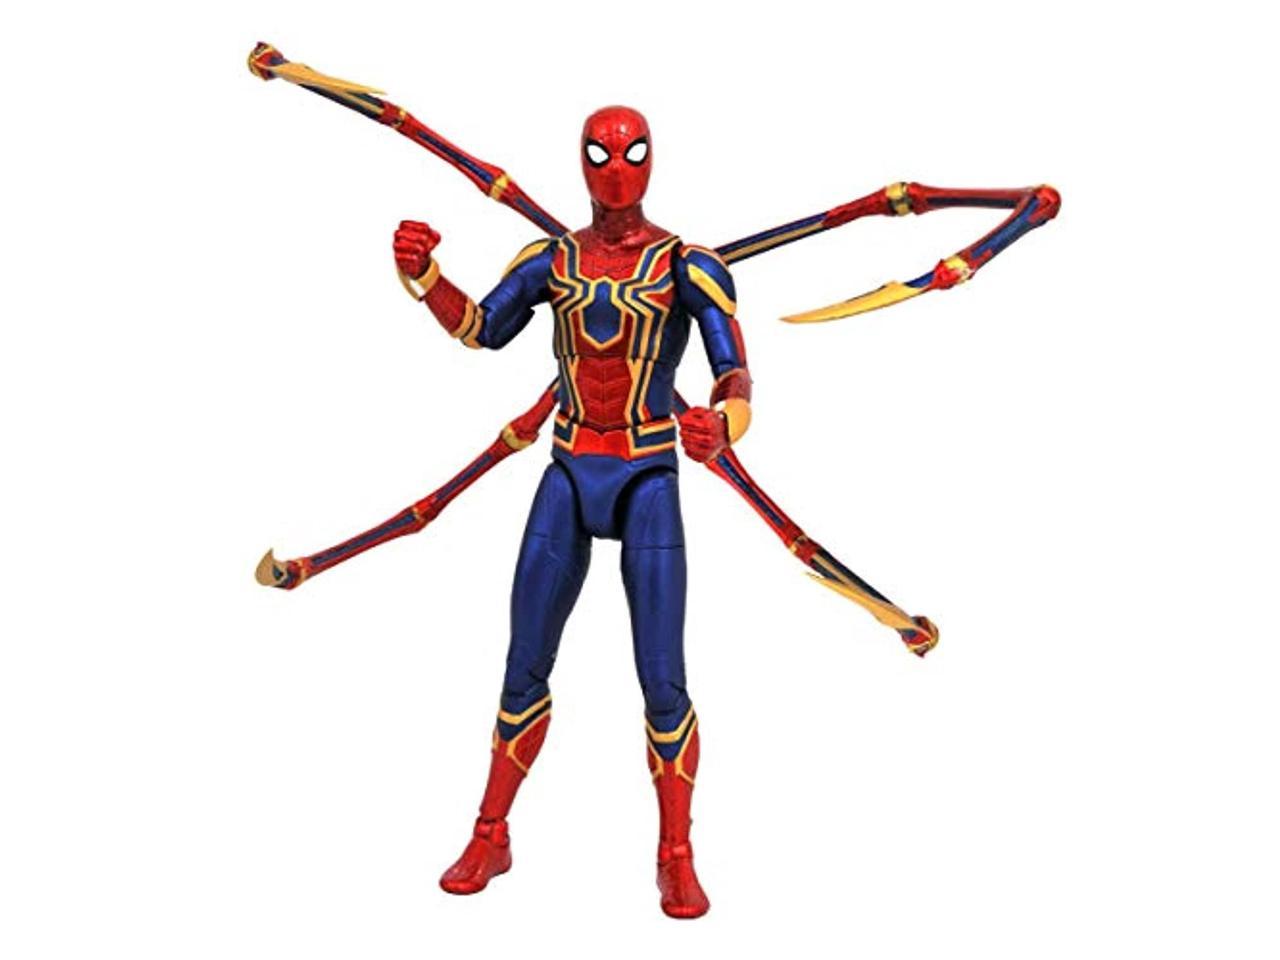 Avengers 3 Infinity War Iron Spider ARTFX Statue Model Marvel Decoration Figure 